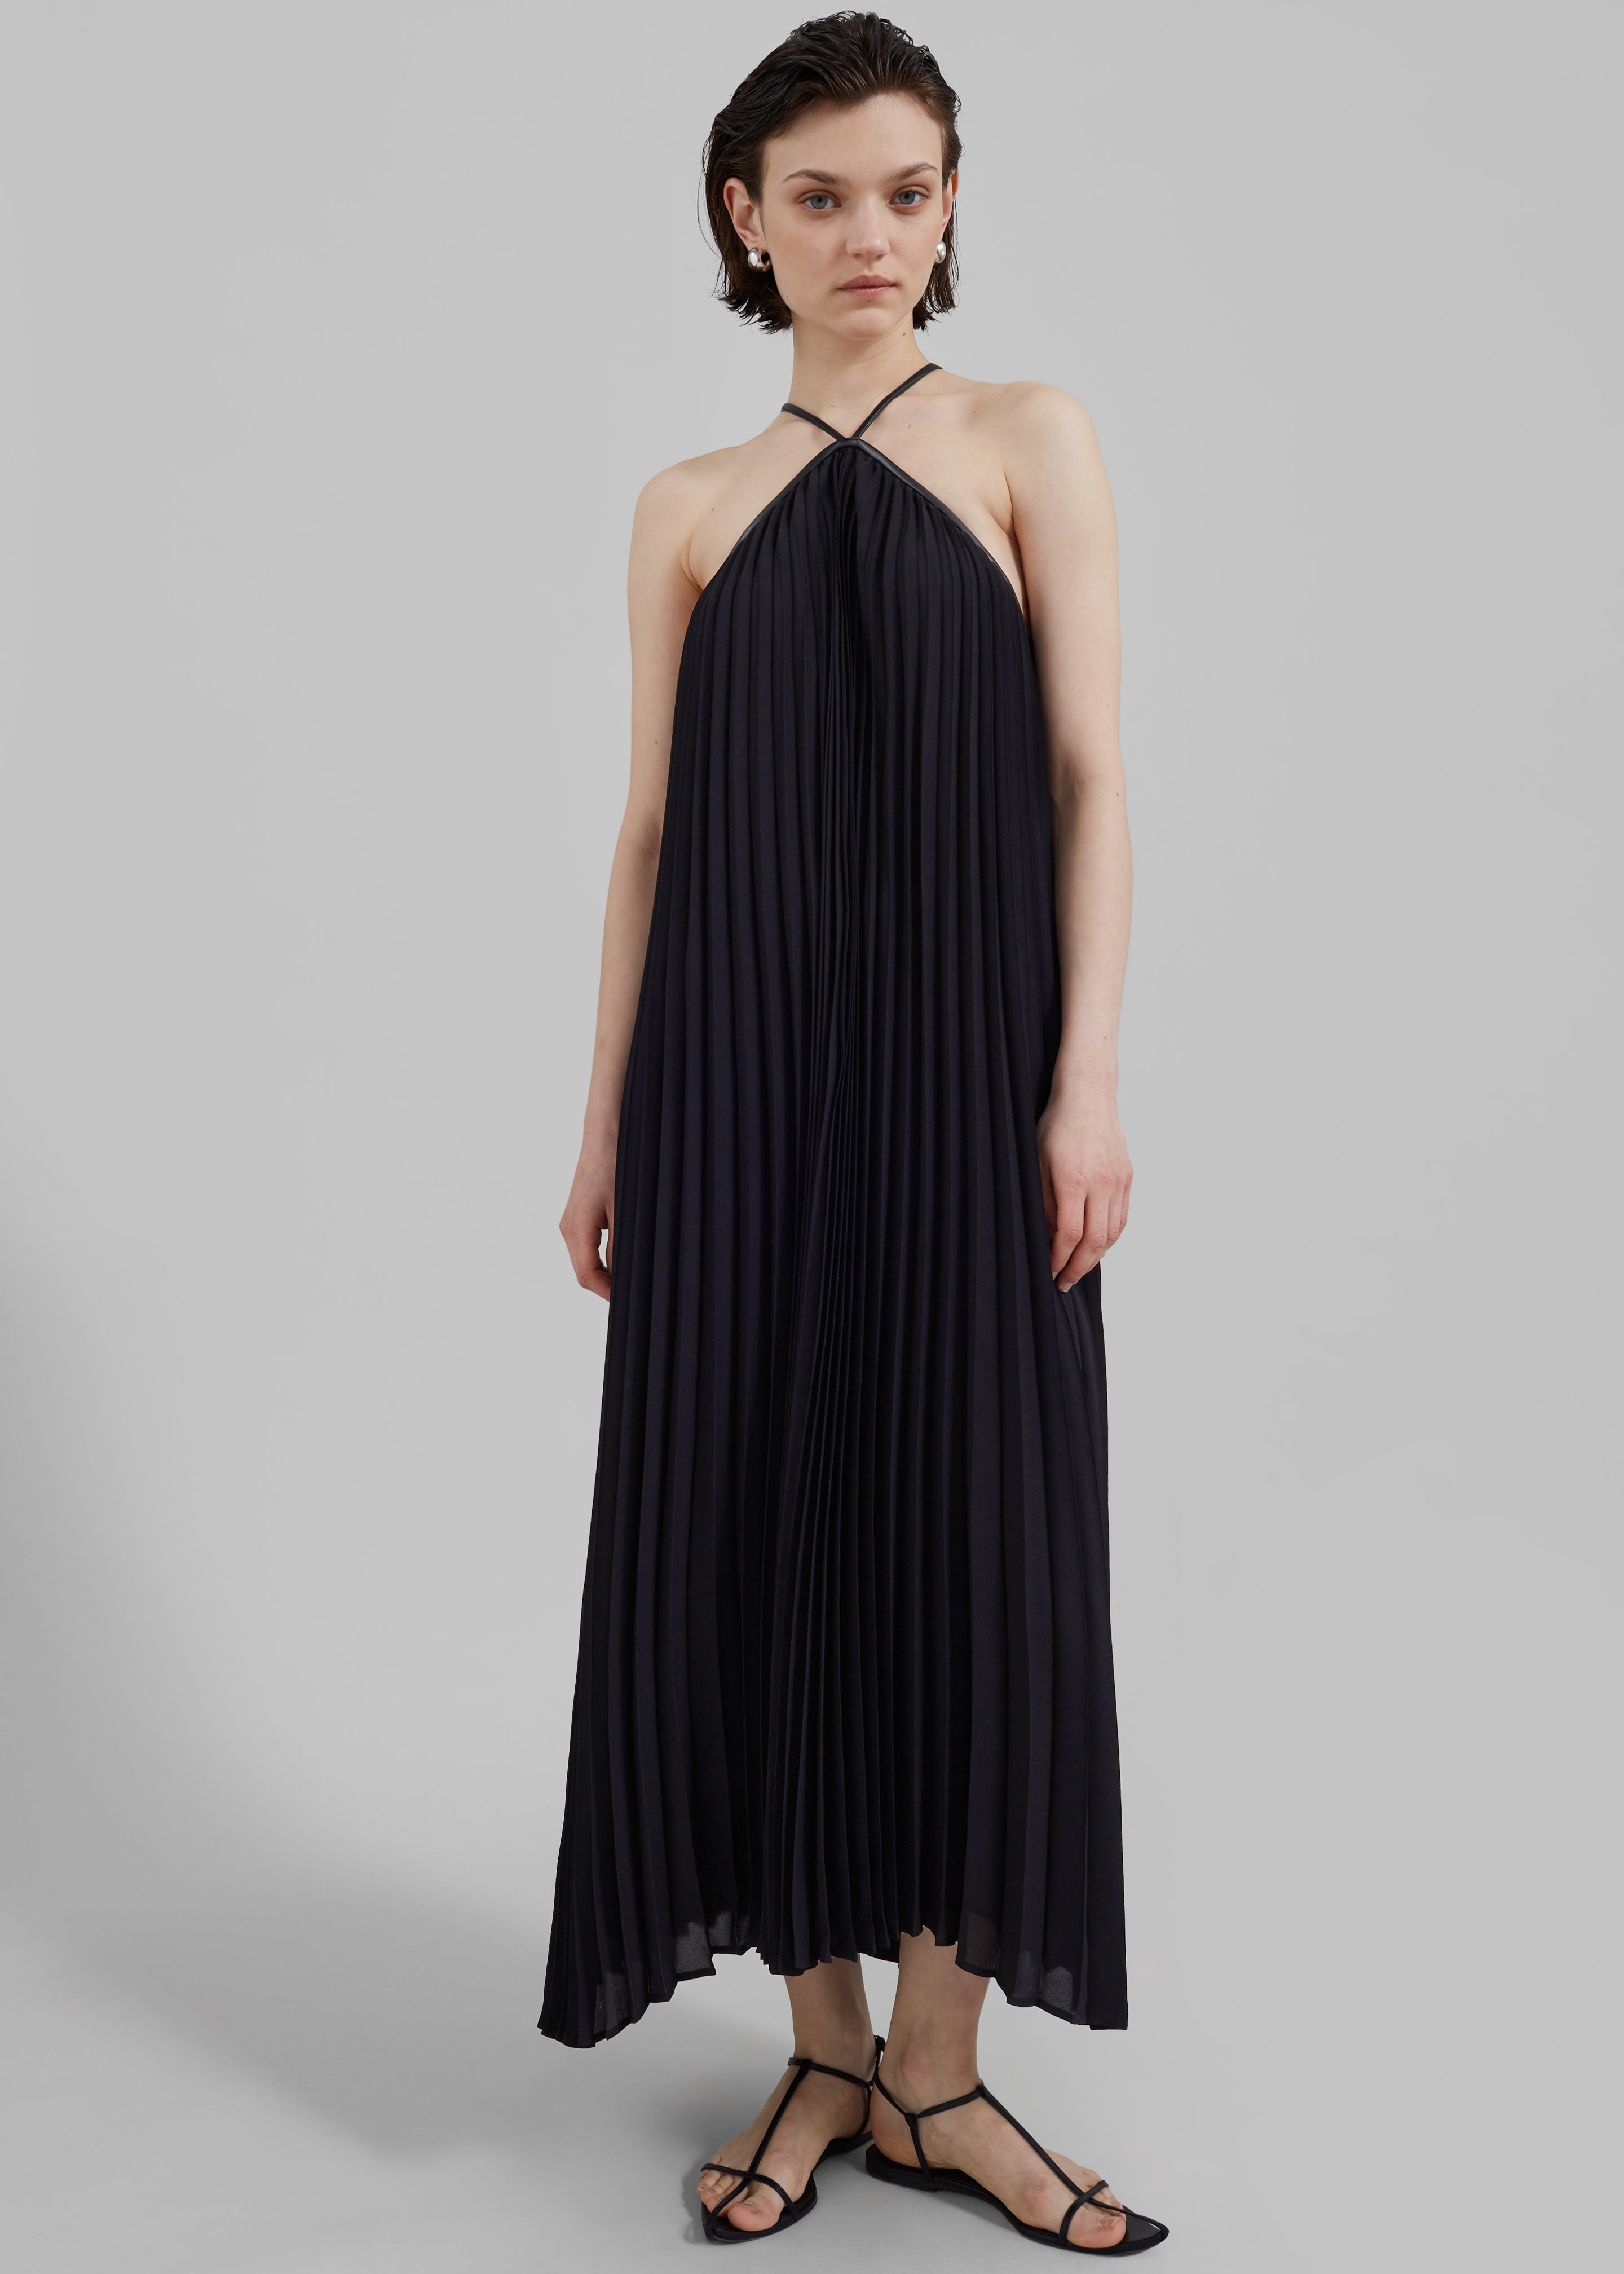 Proenza Schouler White Label Celeste Lightweight Crepe Dress  - Black - 1